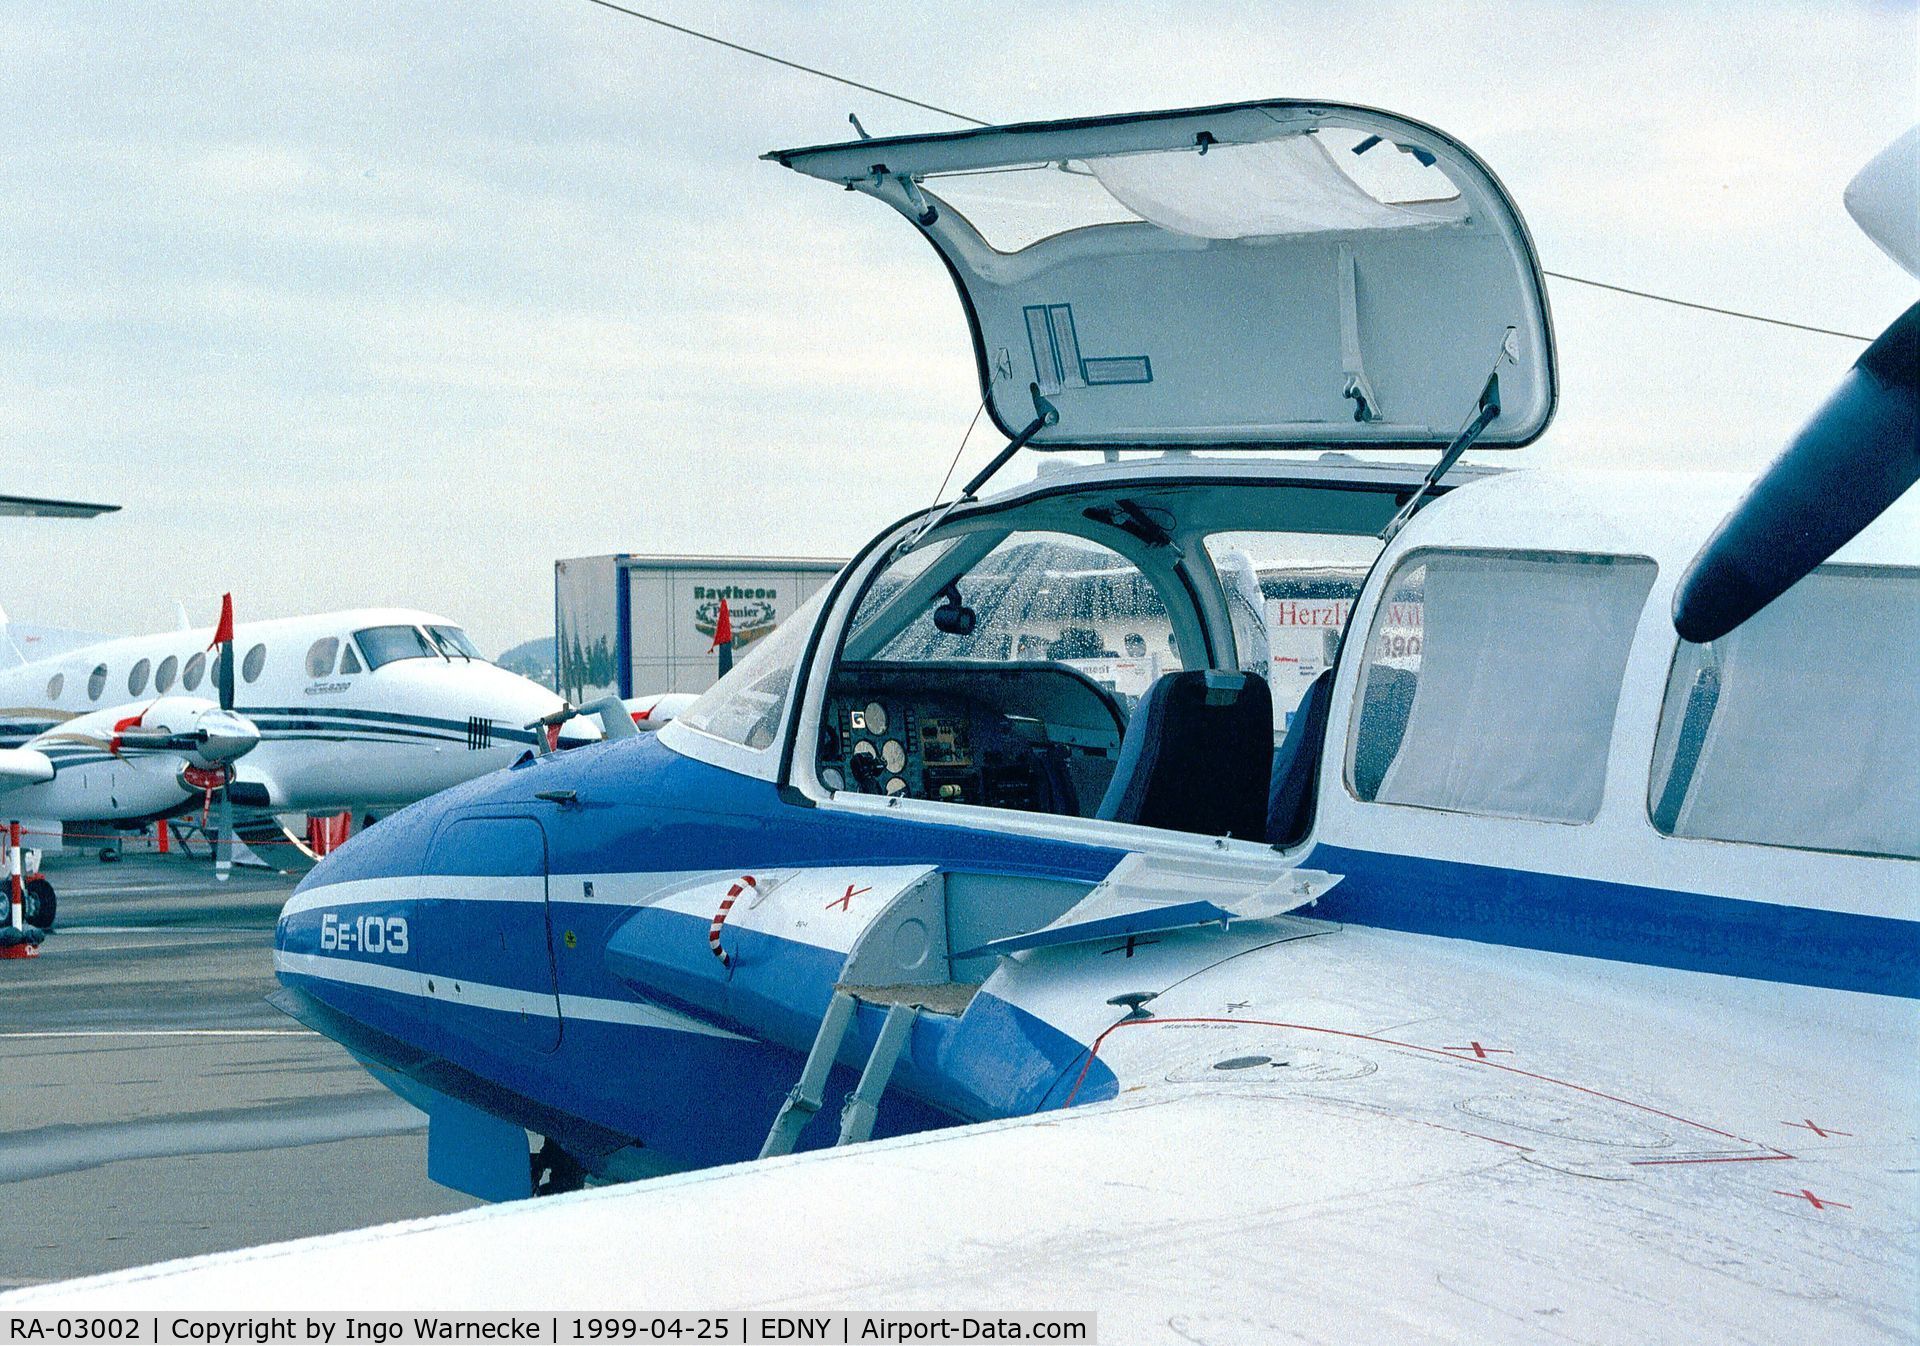 RA-03002, 1997 Beriev Be-103 C/N 3002, Beriev Be-103 second prototype at the Aero 1999, Friedrichshafen